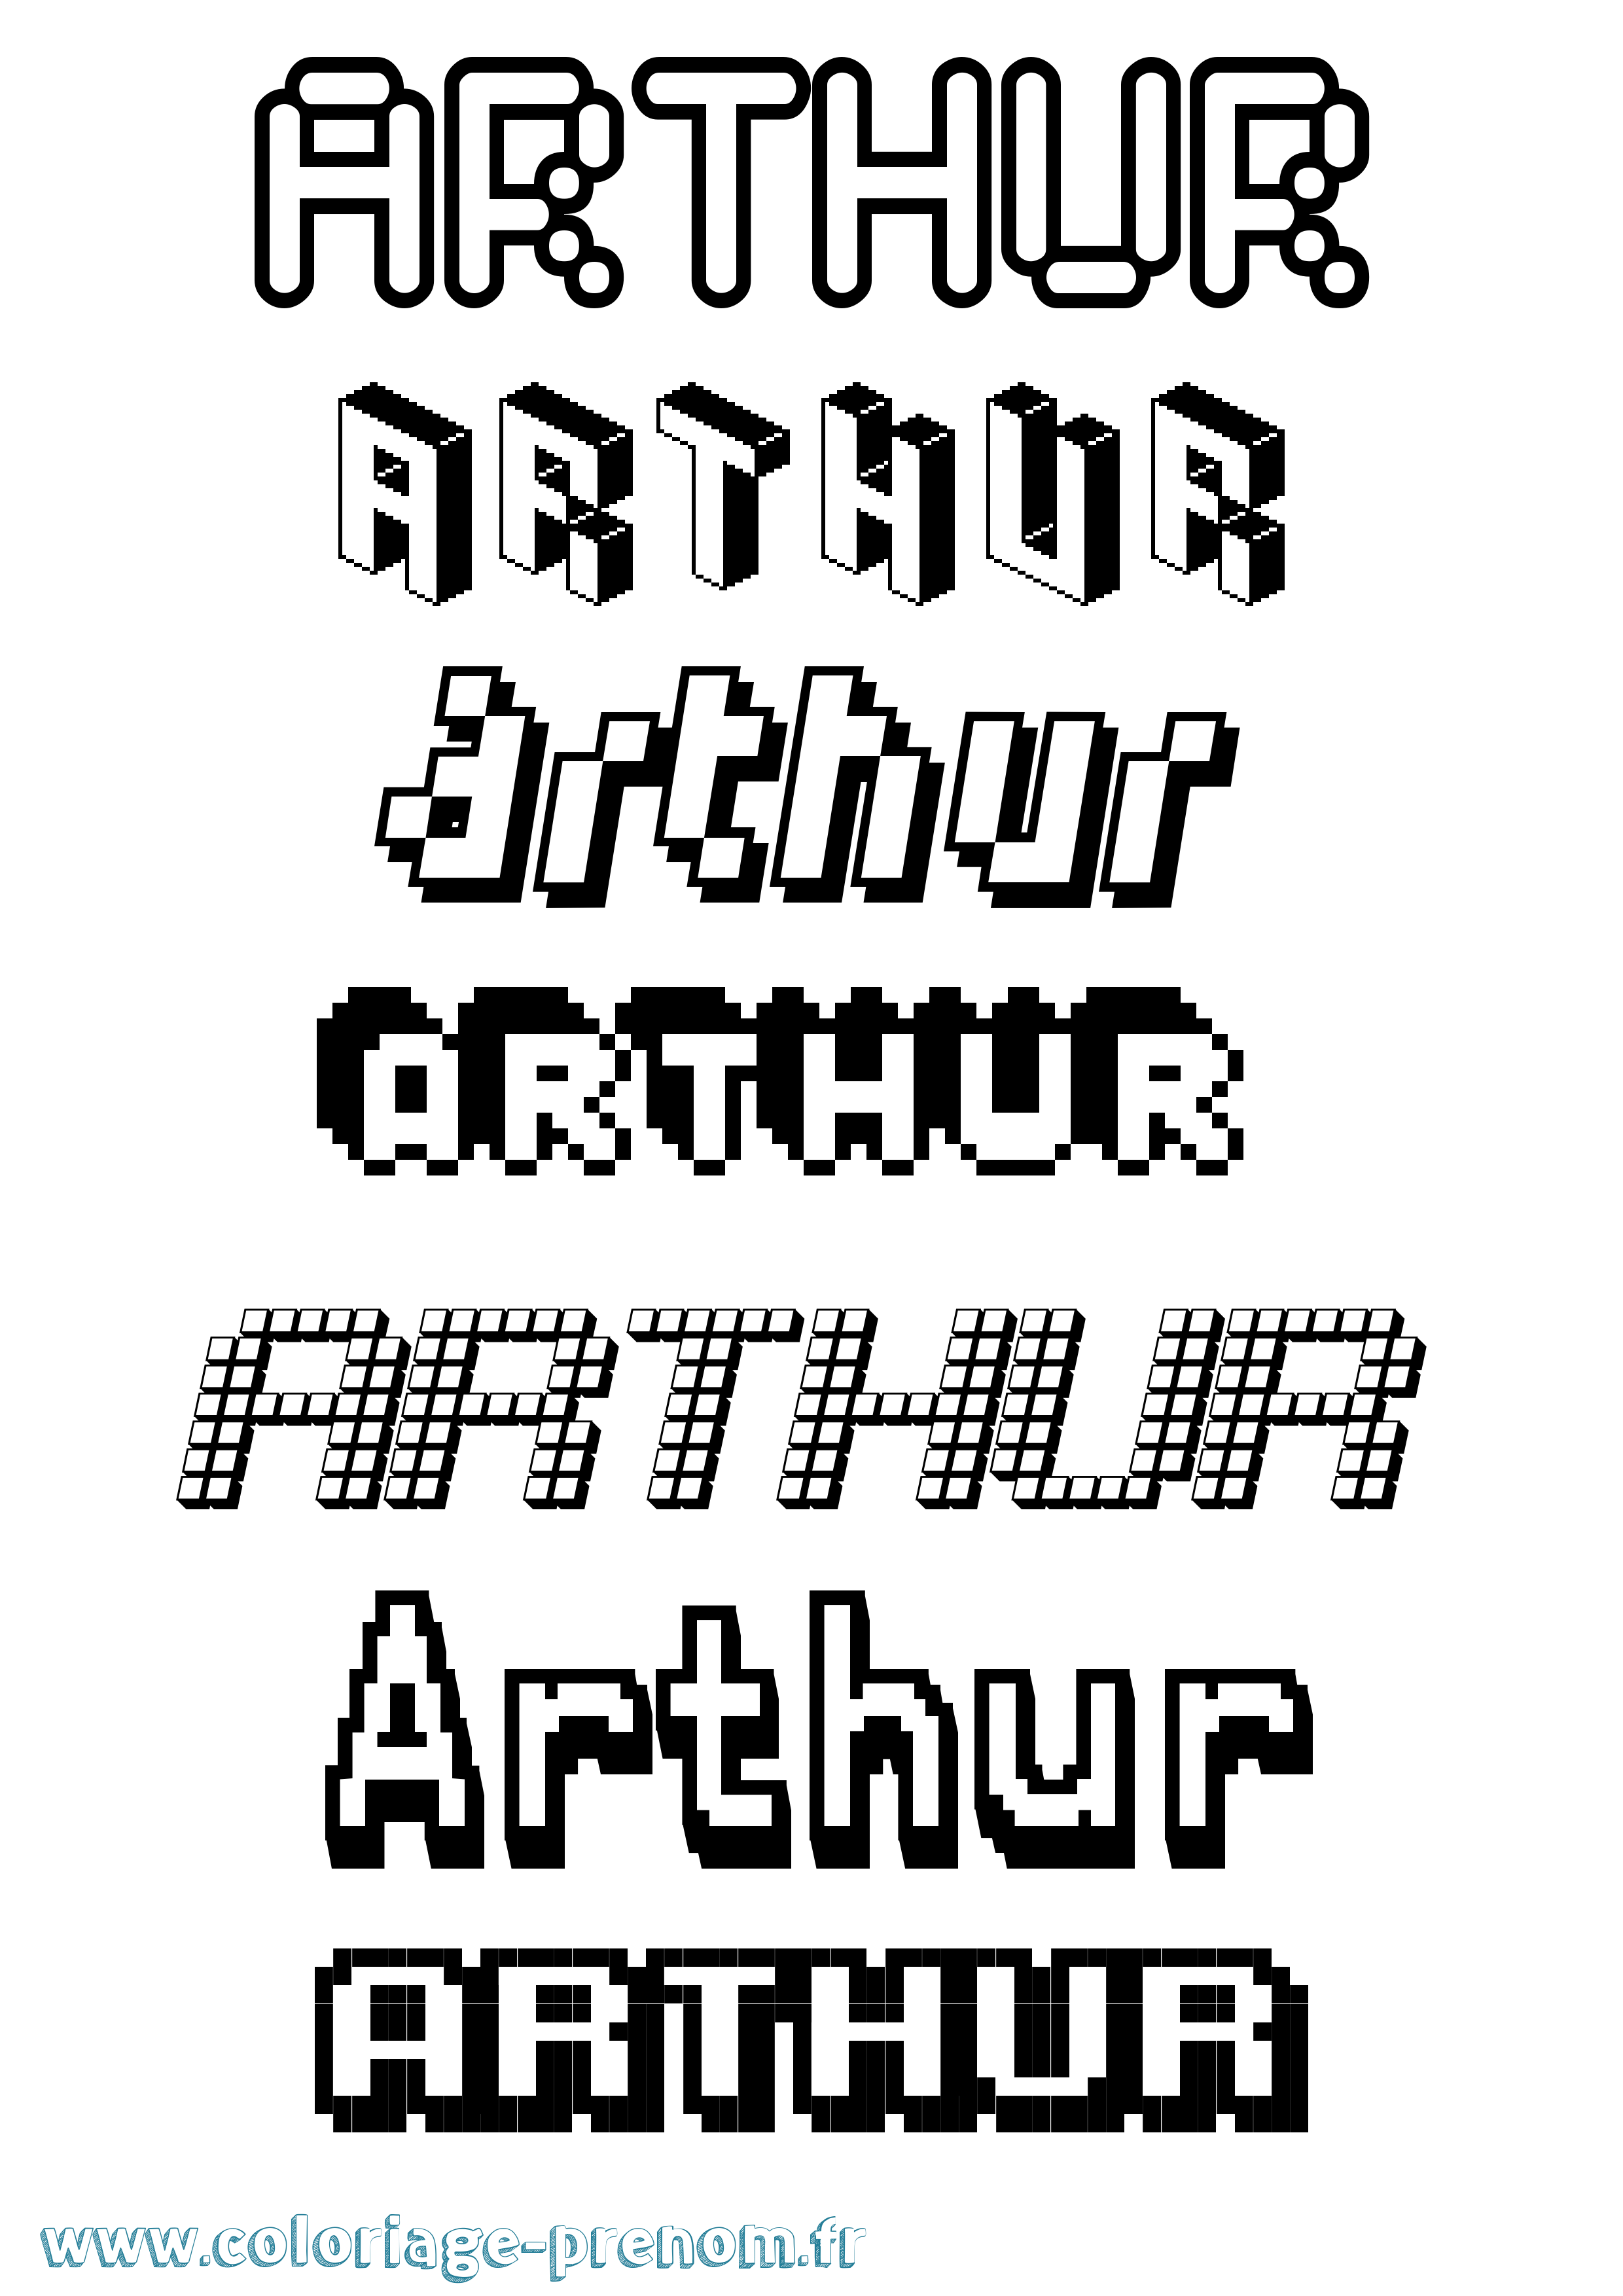 Coloriage prénom Arthur Pixel